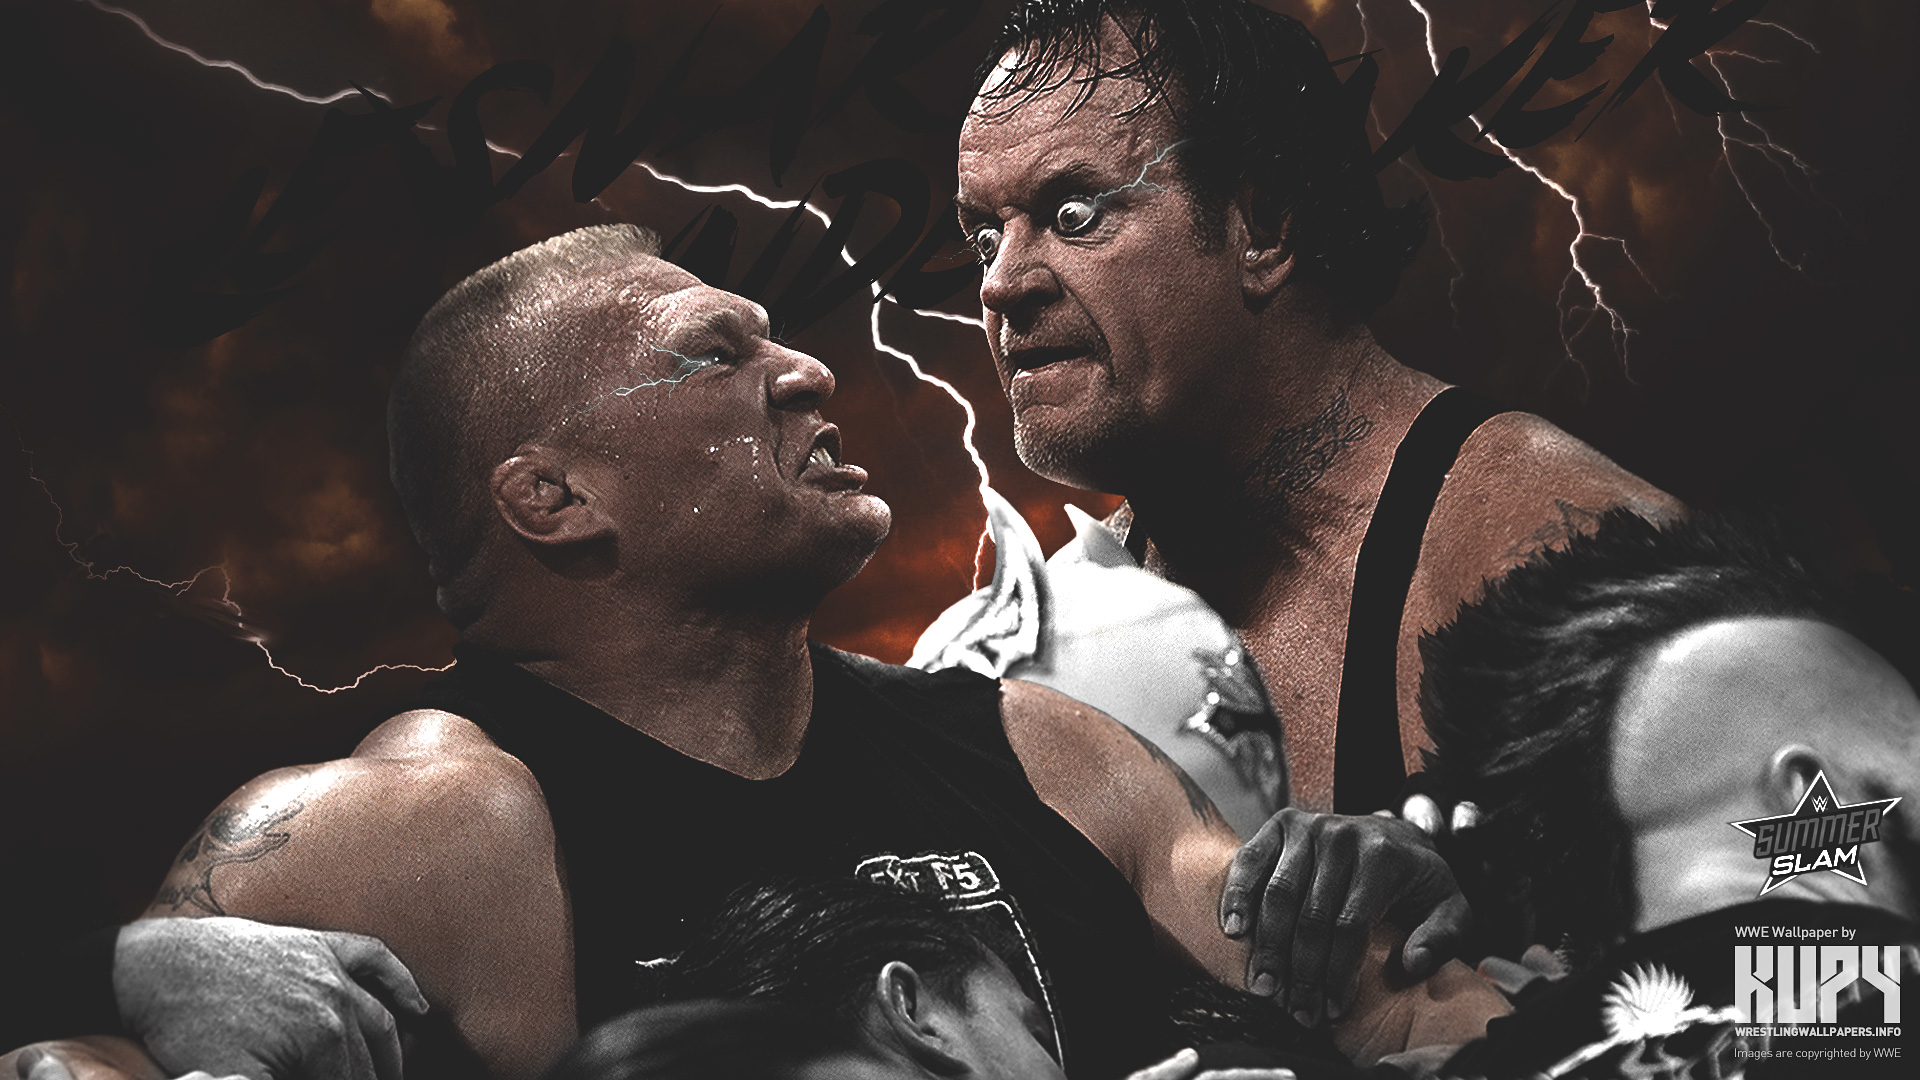 New Wwe Summerslam Brock Lesnar Vs The Undertaker Wallpaper